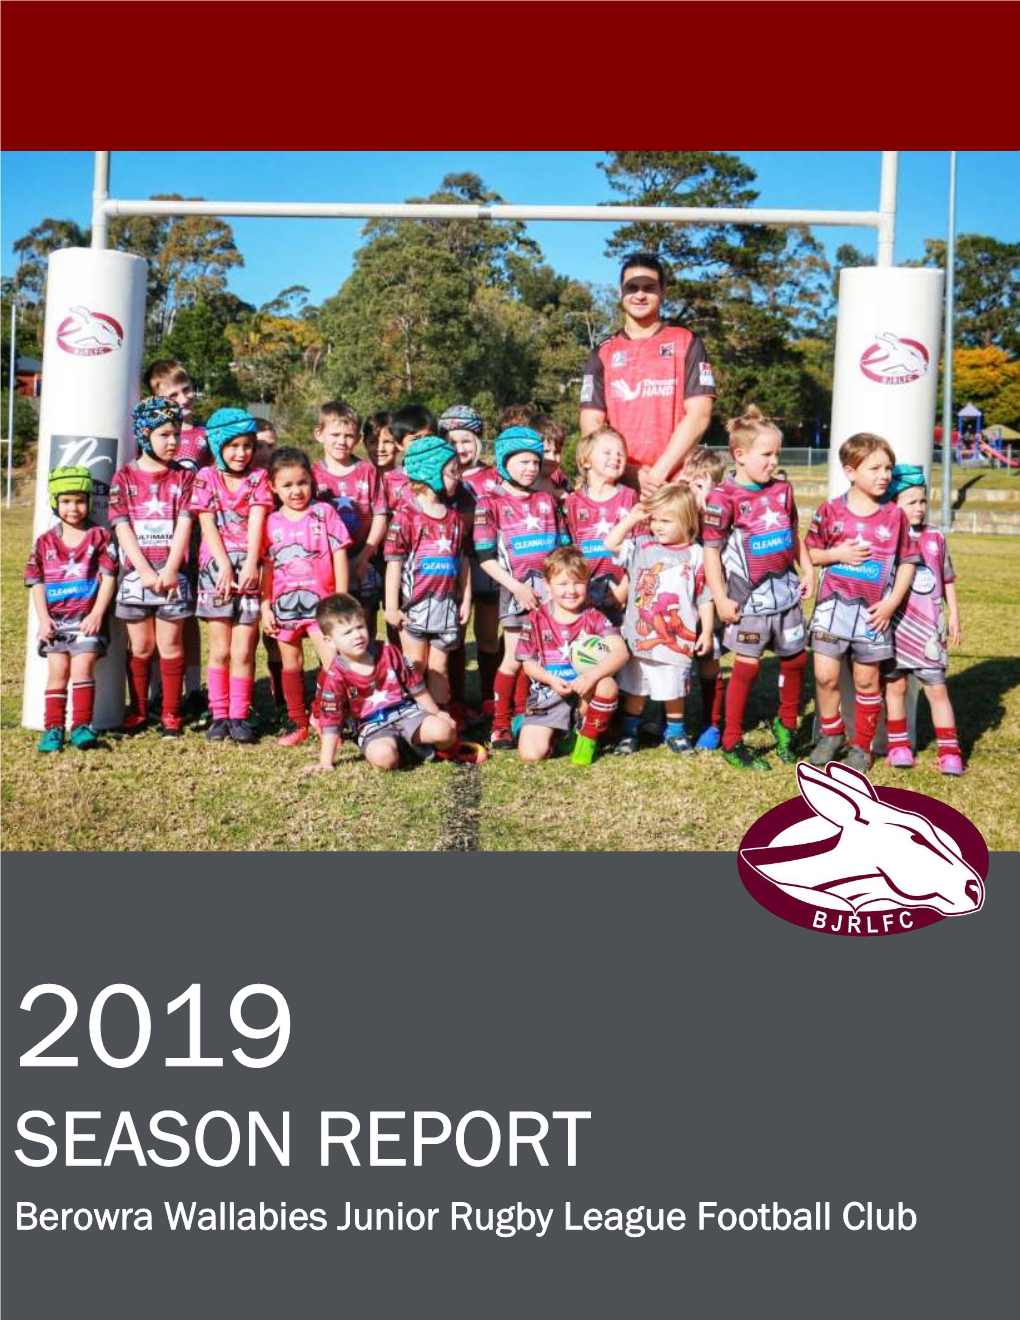 SEASON REPORT Berowra Wallabies Junior Rugby League Football Club